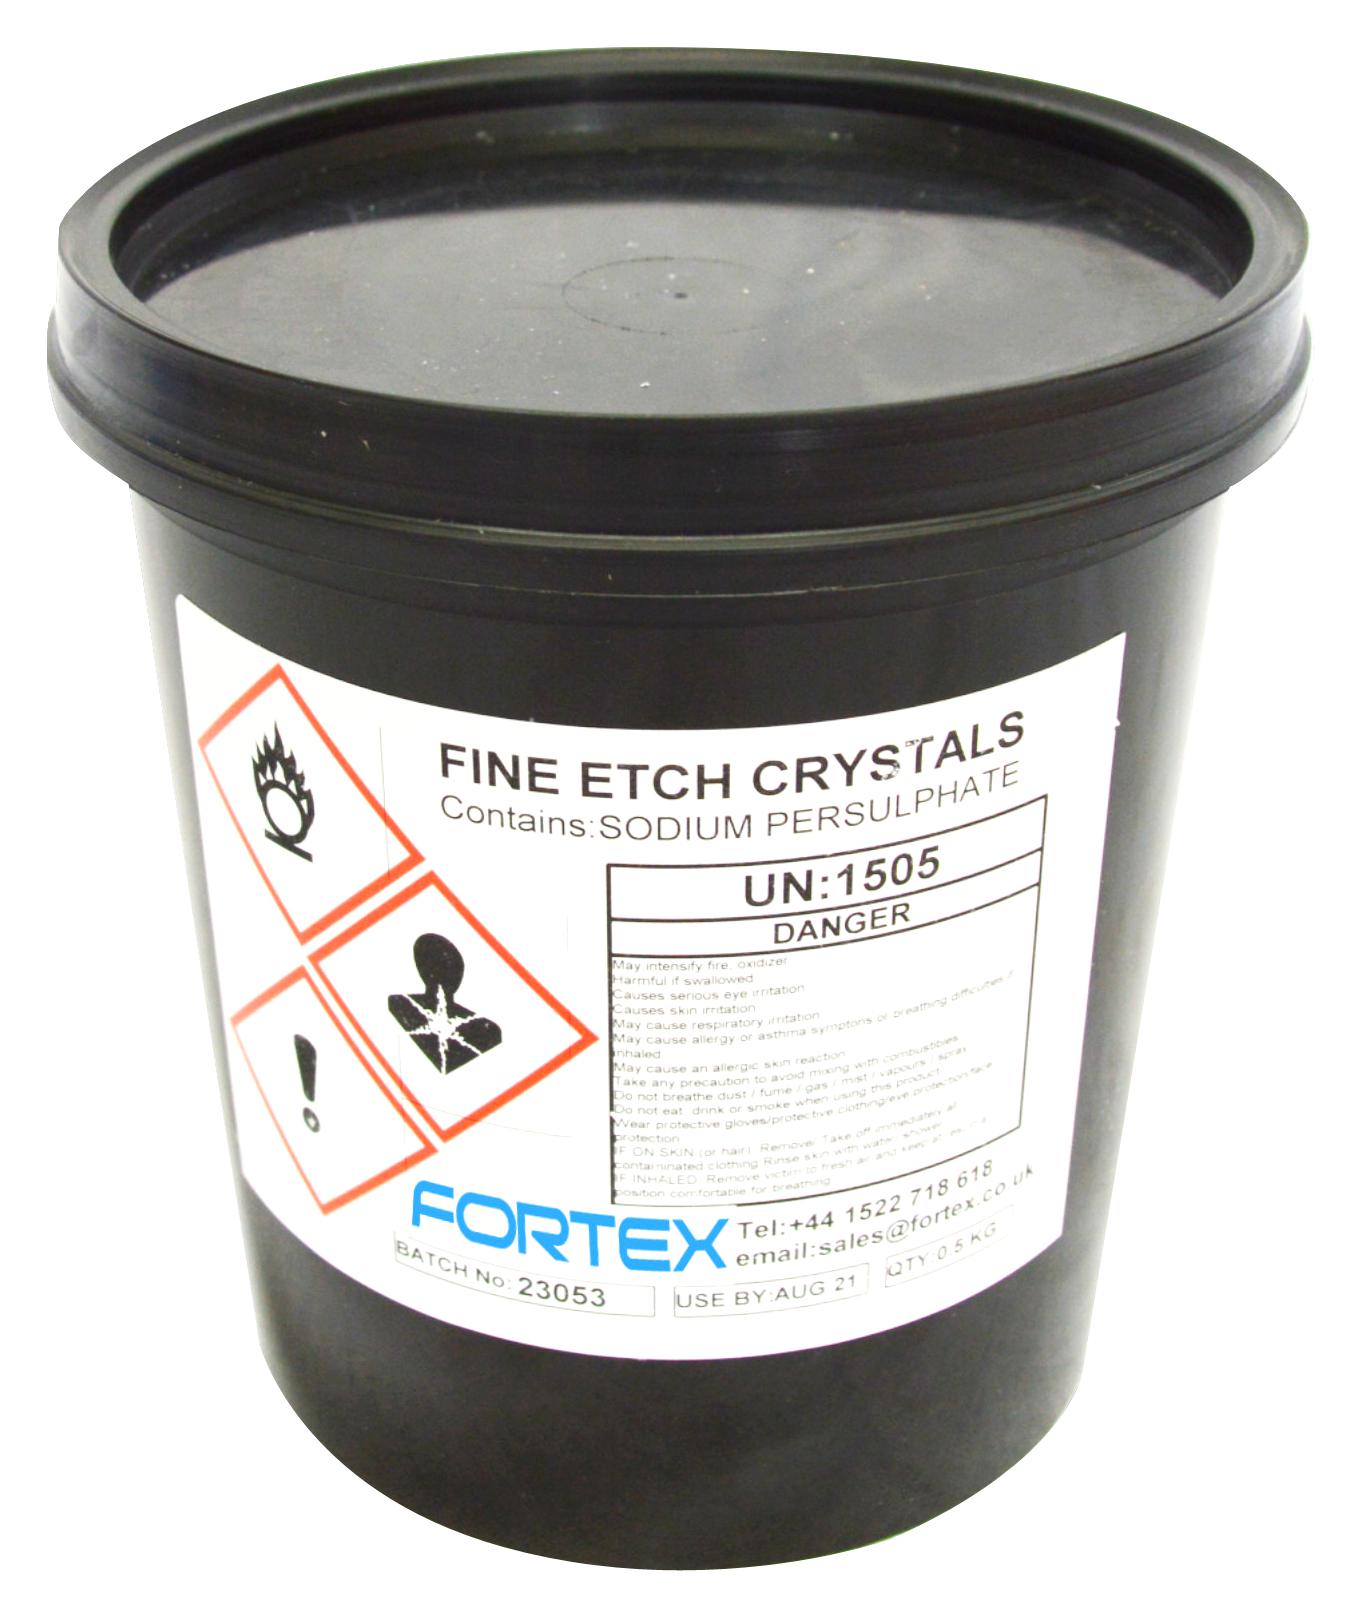 Fortex Soper-1Kg Fine Etch Crystal, Container, 1Kg